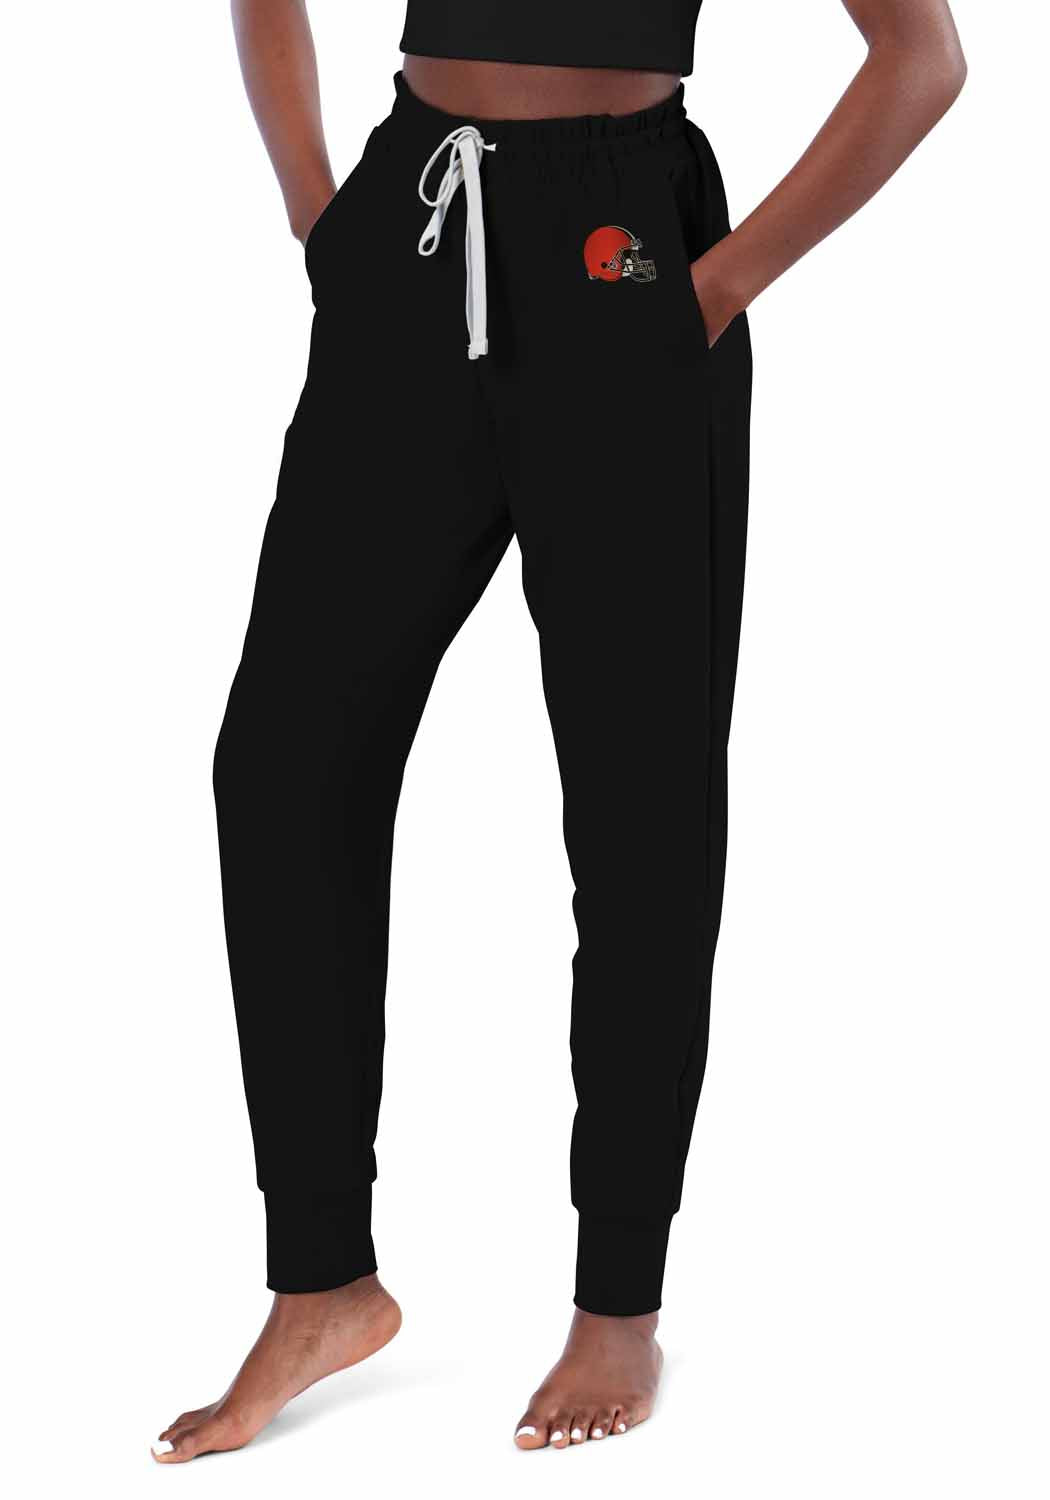 Cleveland Browns NFL Women's Phase Jogger Pants - Black